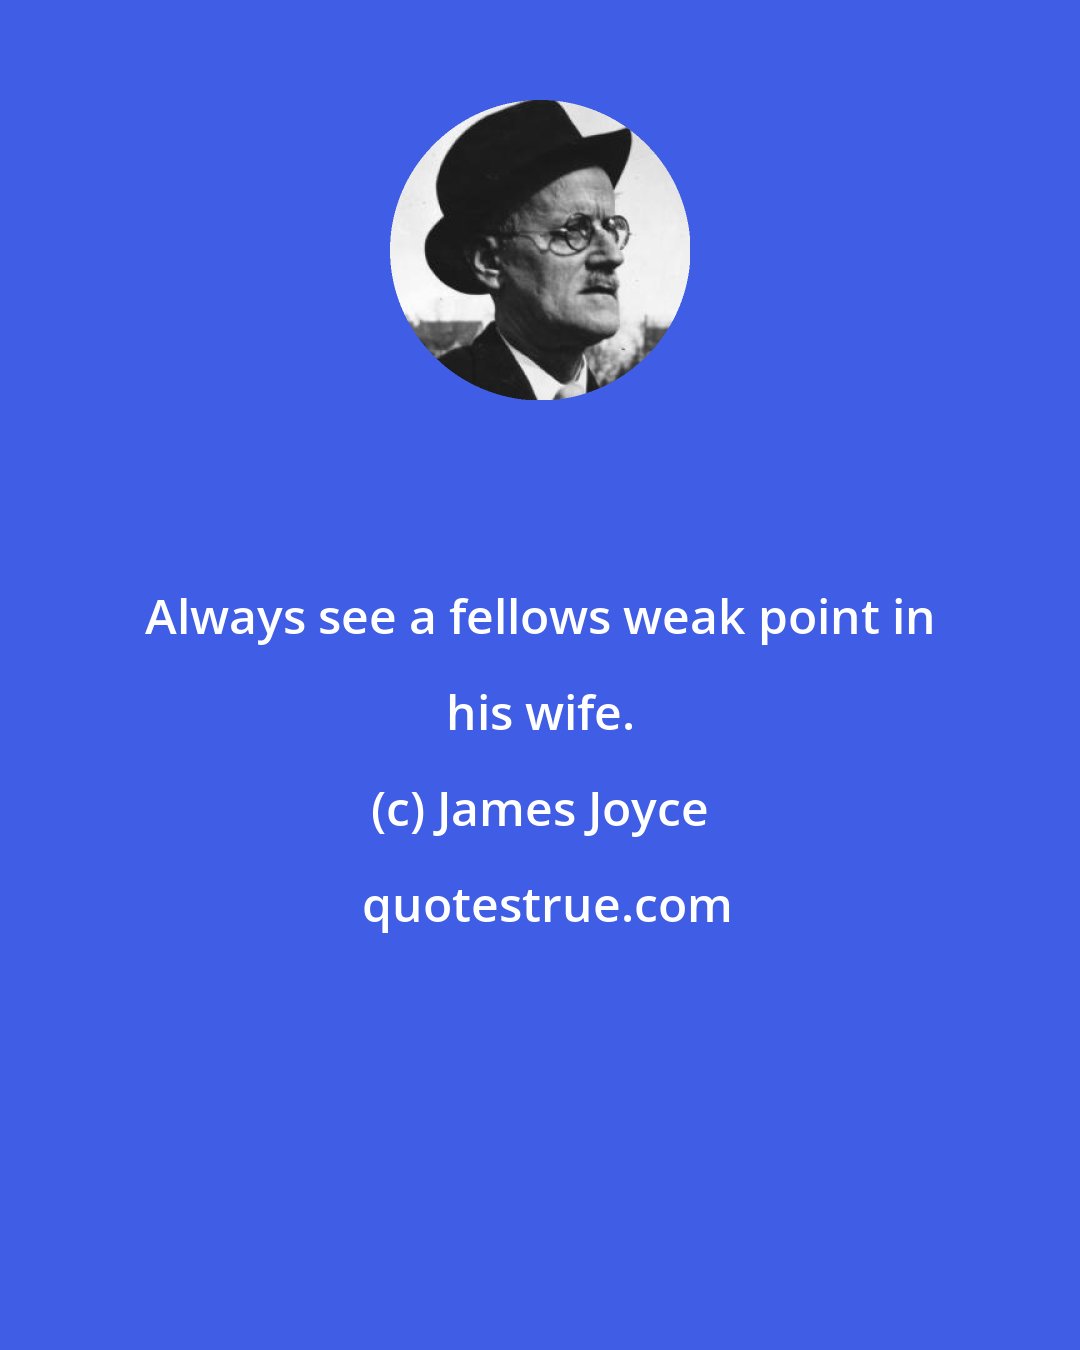 James Joyce: Always see a fellows weak point in his wife.